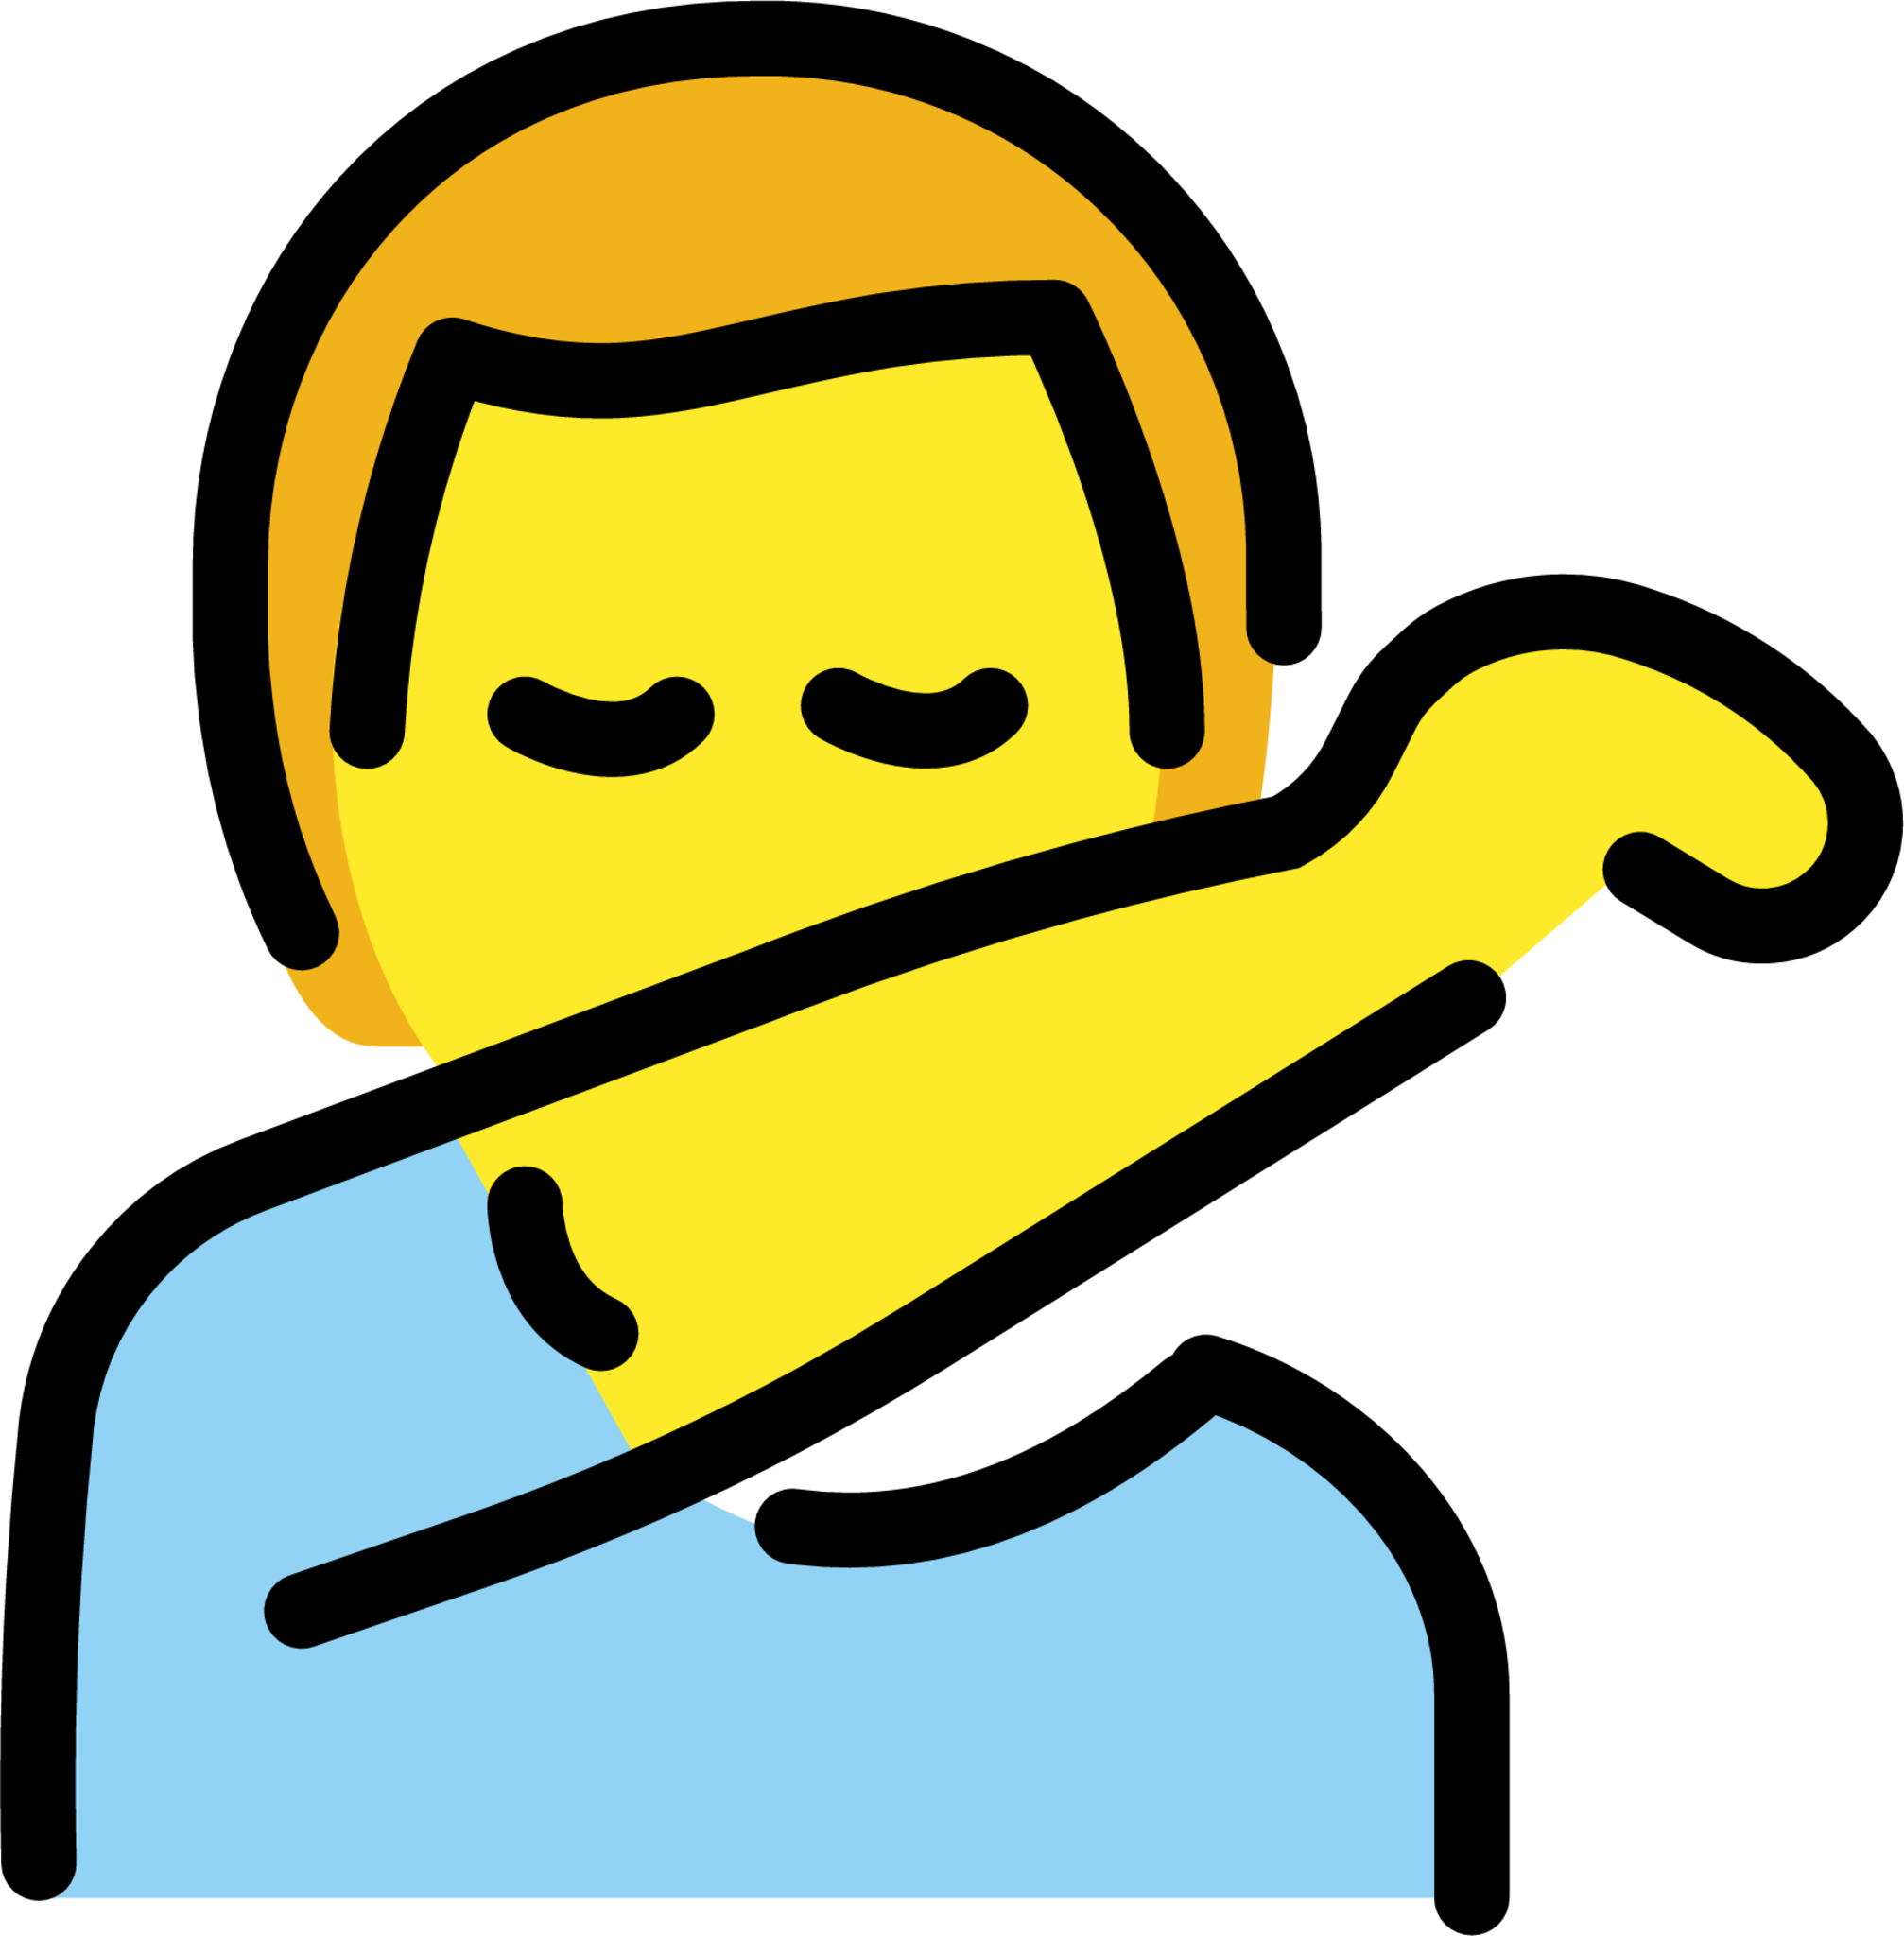 man sneezing into elbow emoji